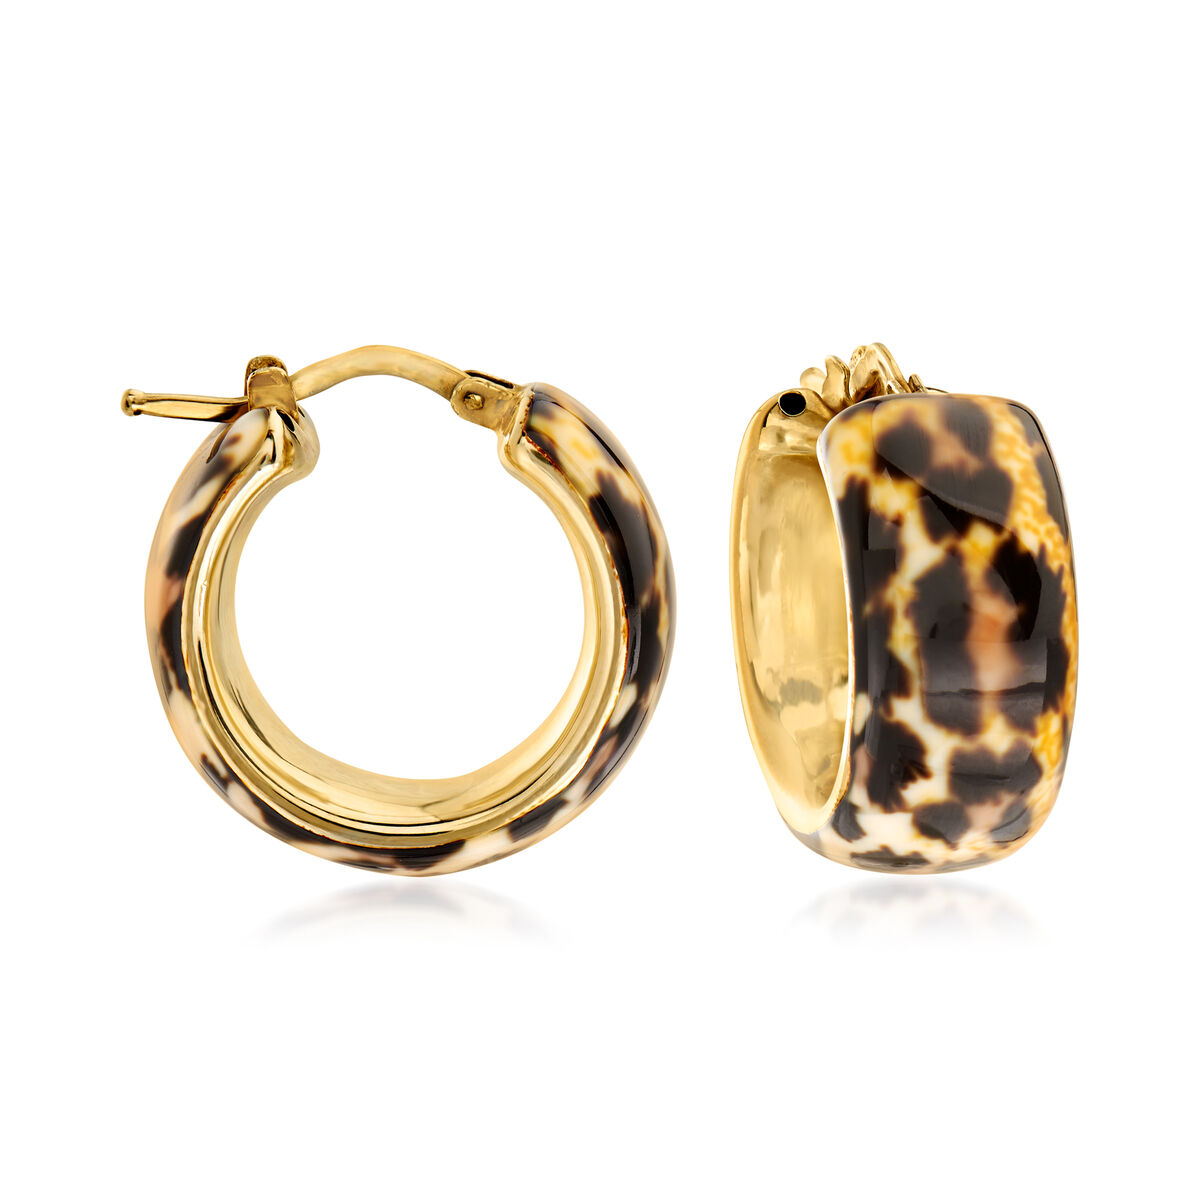 Italian Leopard-Print Enamel Hoop Earrings in 18kt Gold Over Sterling. 7/8"  | Ross-Simons